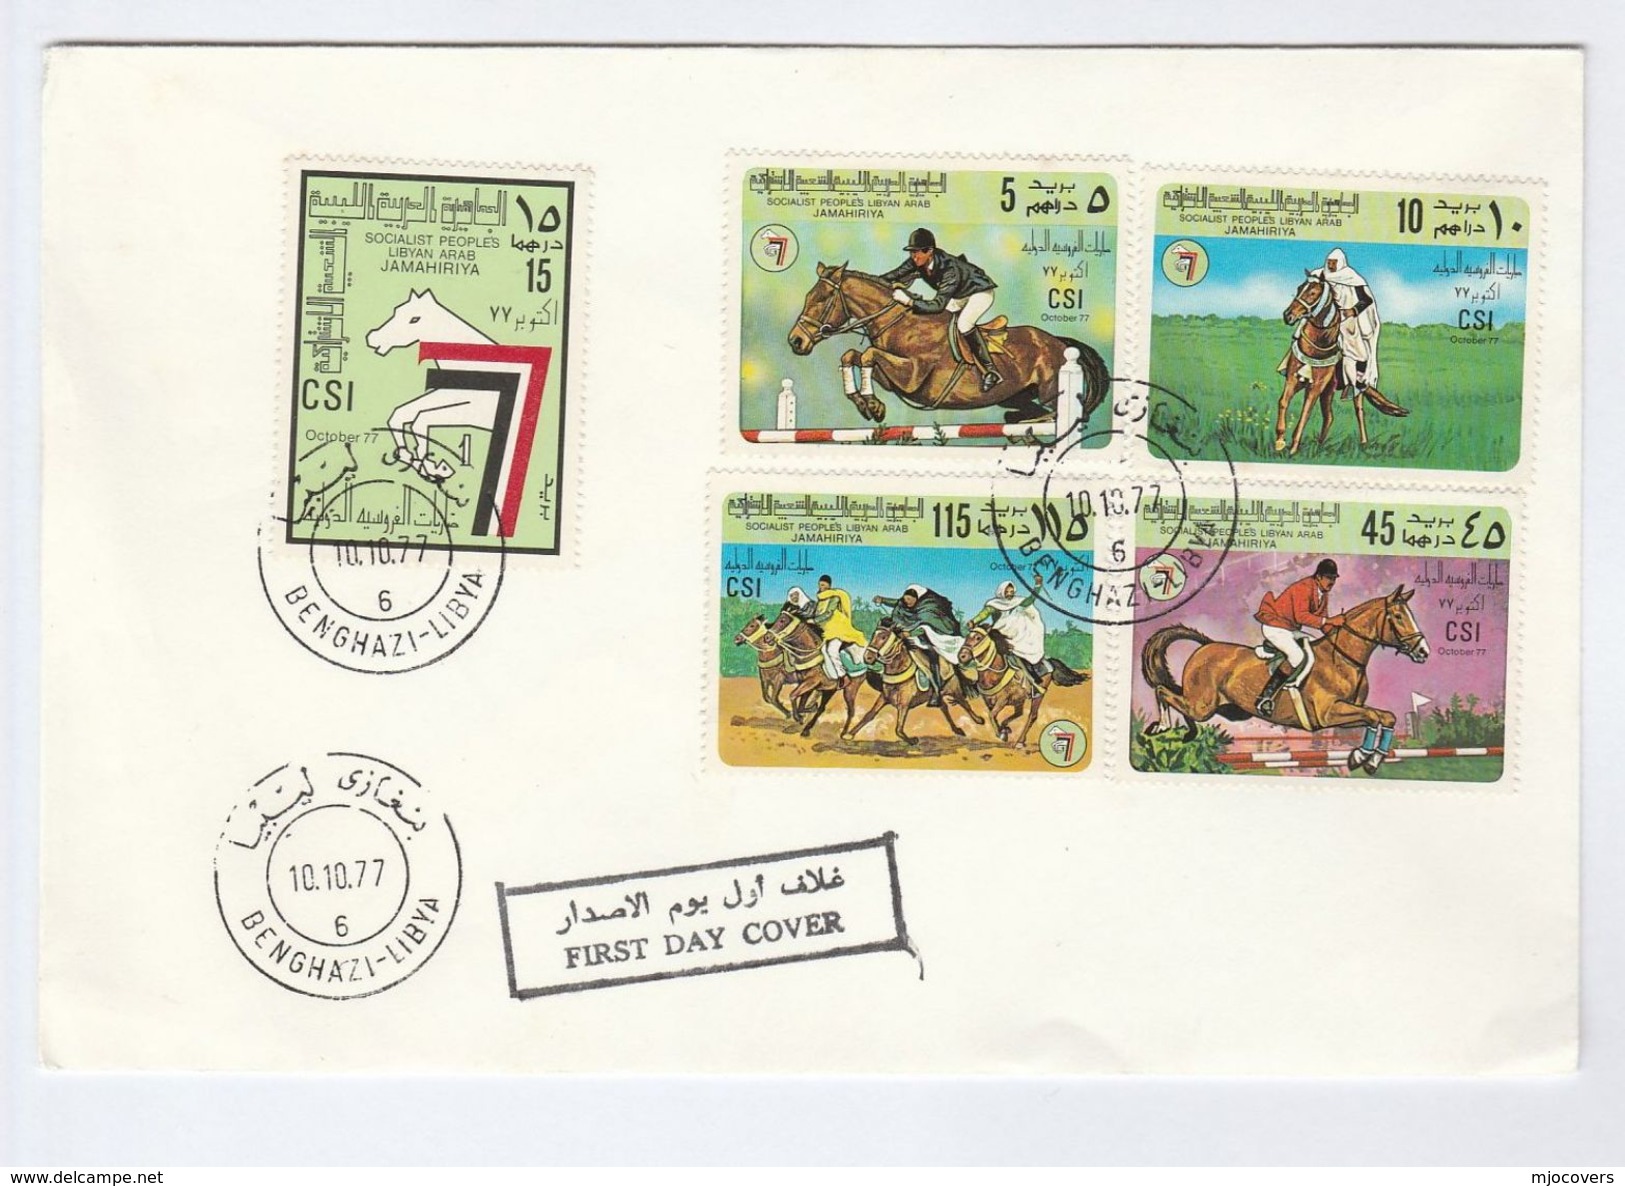 1977 Benghazi  LIBYA FDC Stamps HORSE SPORT EQUESTRIAN International Horse Show Horses Cover - Libya